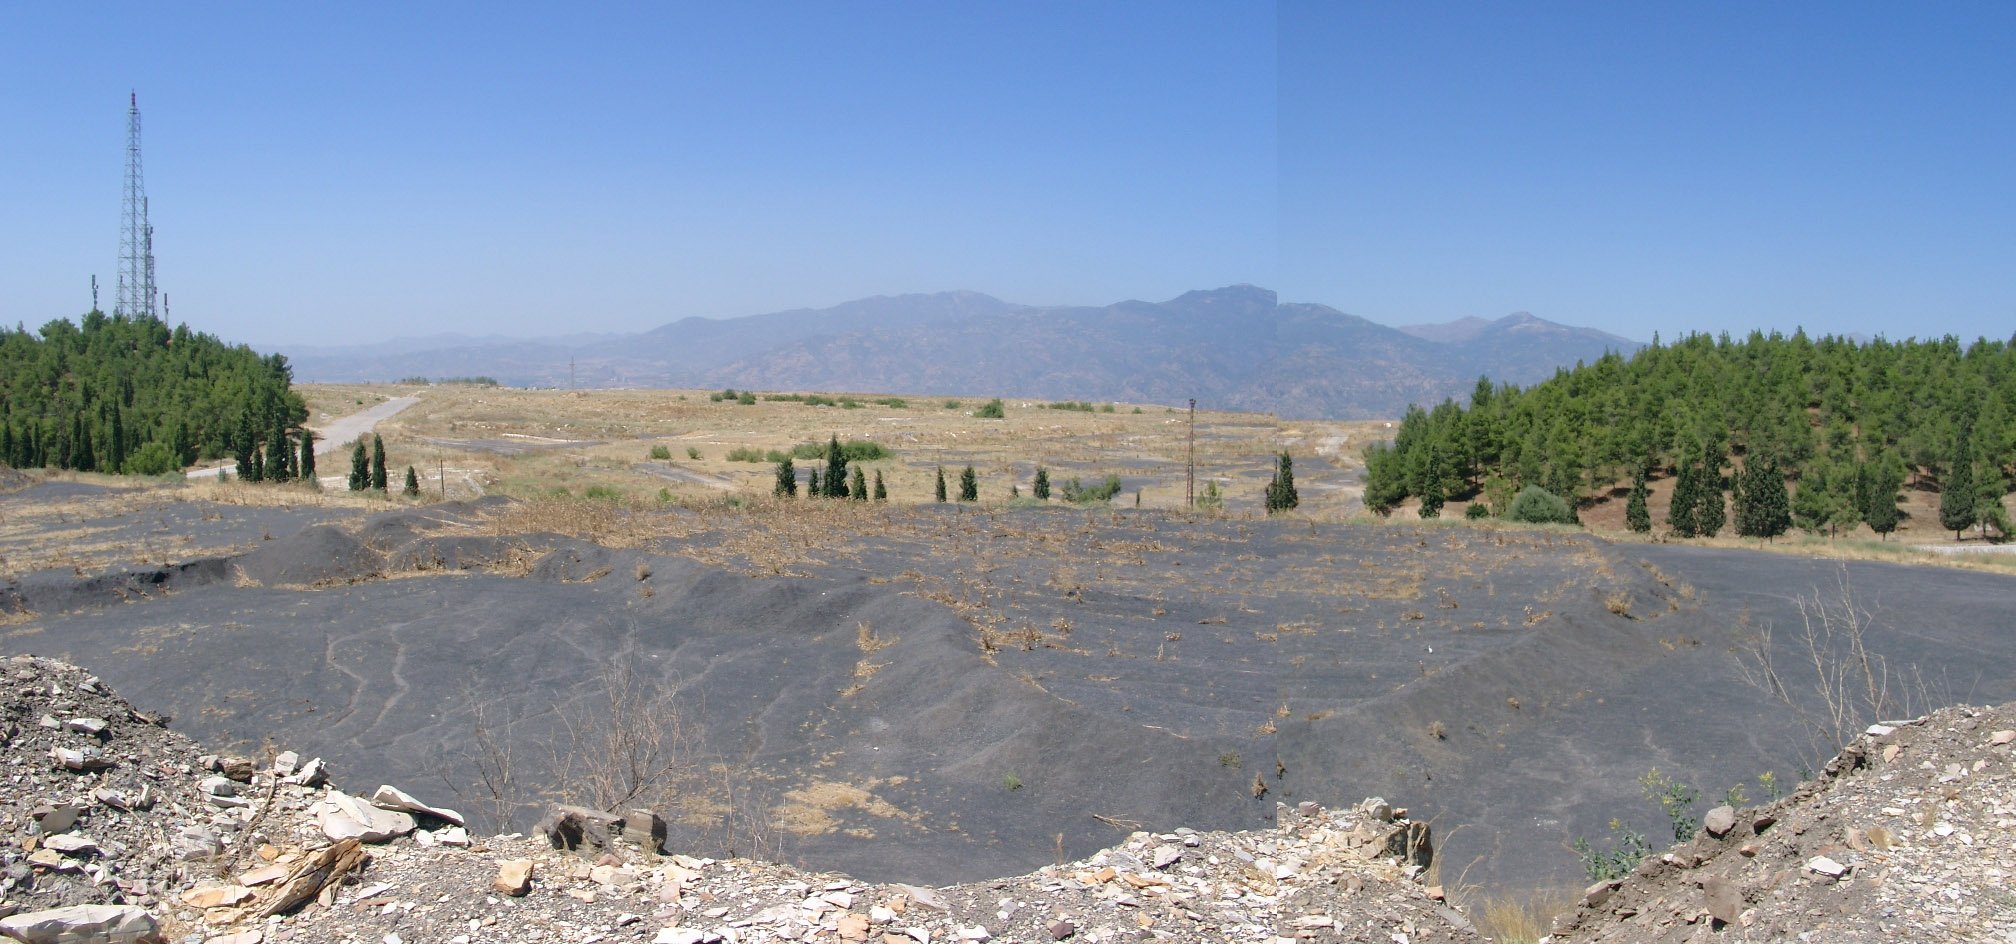 Pohon zaitun ditanam oleh perusahaan Turki Aydın Ligyit Madencilik dan Zetay Tarm di lokasi tambang yang ditinggalkan di provinsi Aydın, Turki.  (Foto disediakan untuk pers)